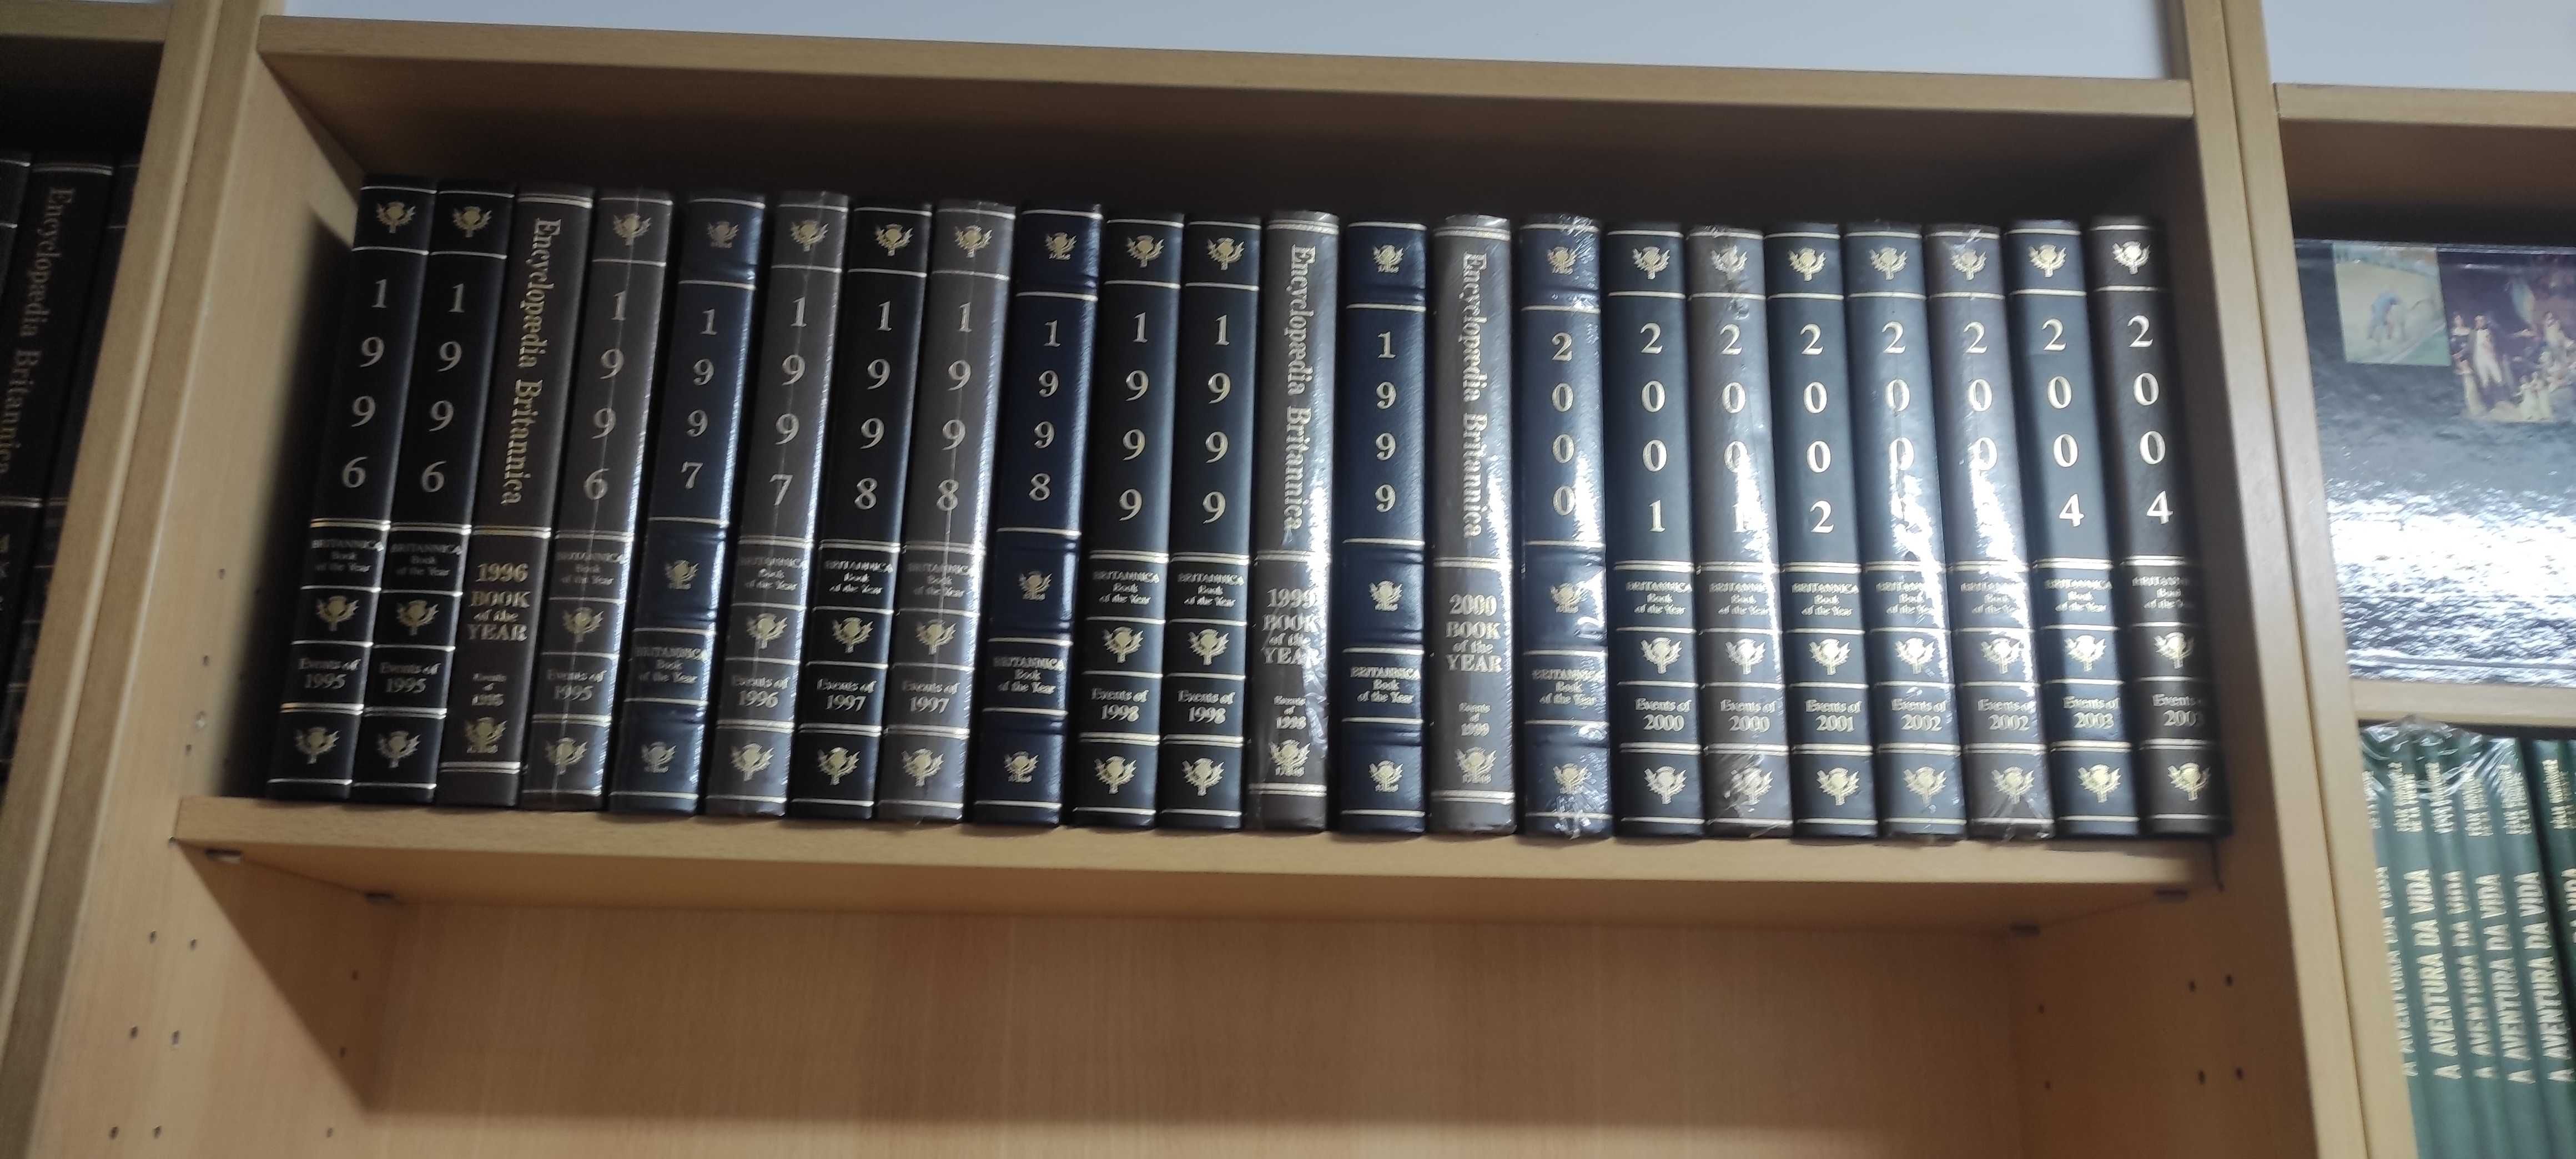 Encyclopaedia Britannica e Encyclopaedia Universalis ( actualizações)